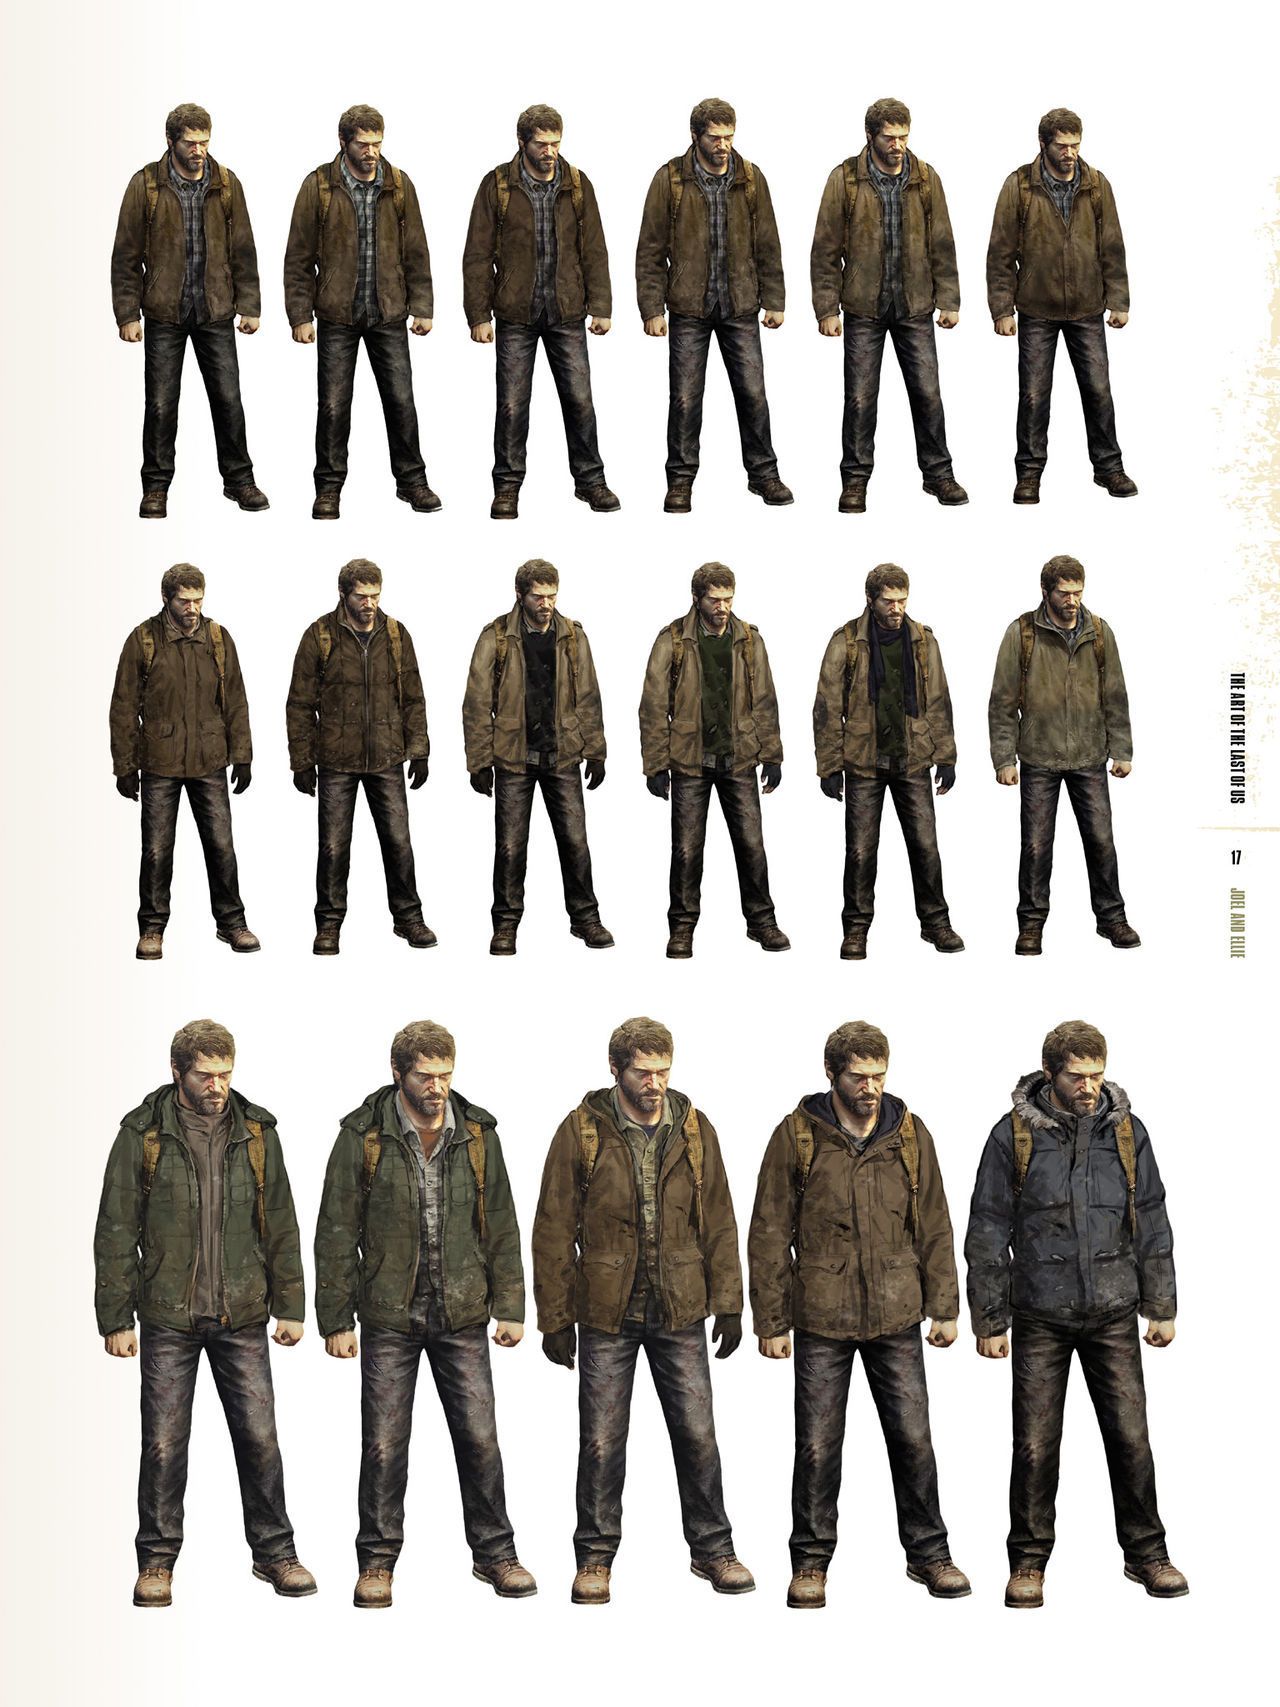 The Art of The Last of Us (2013) (Digital)